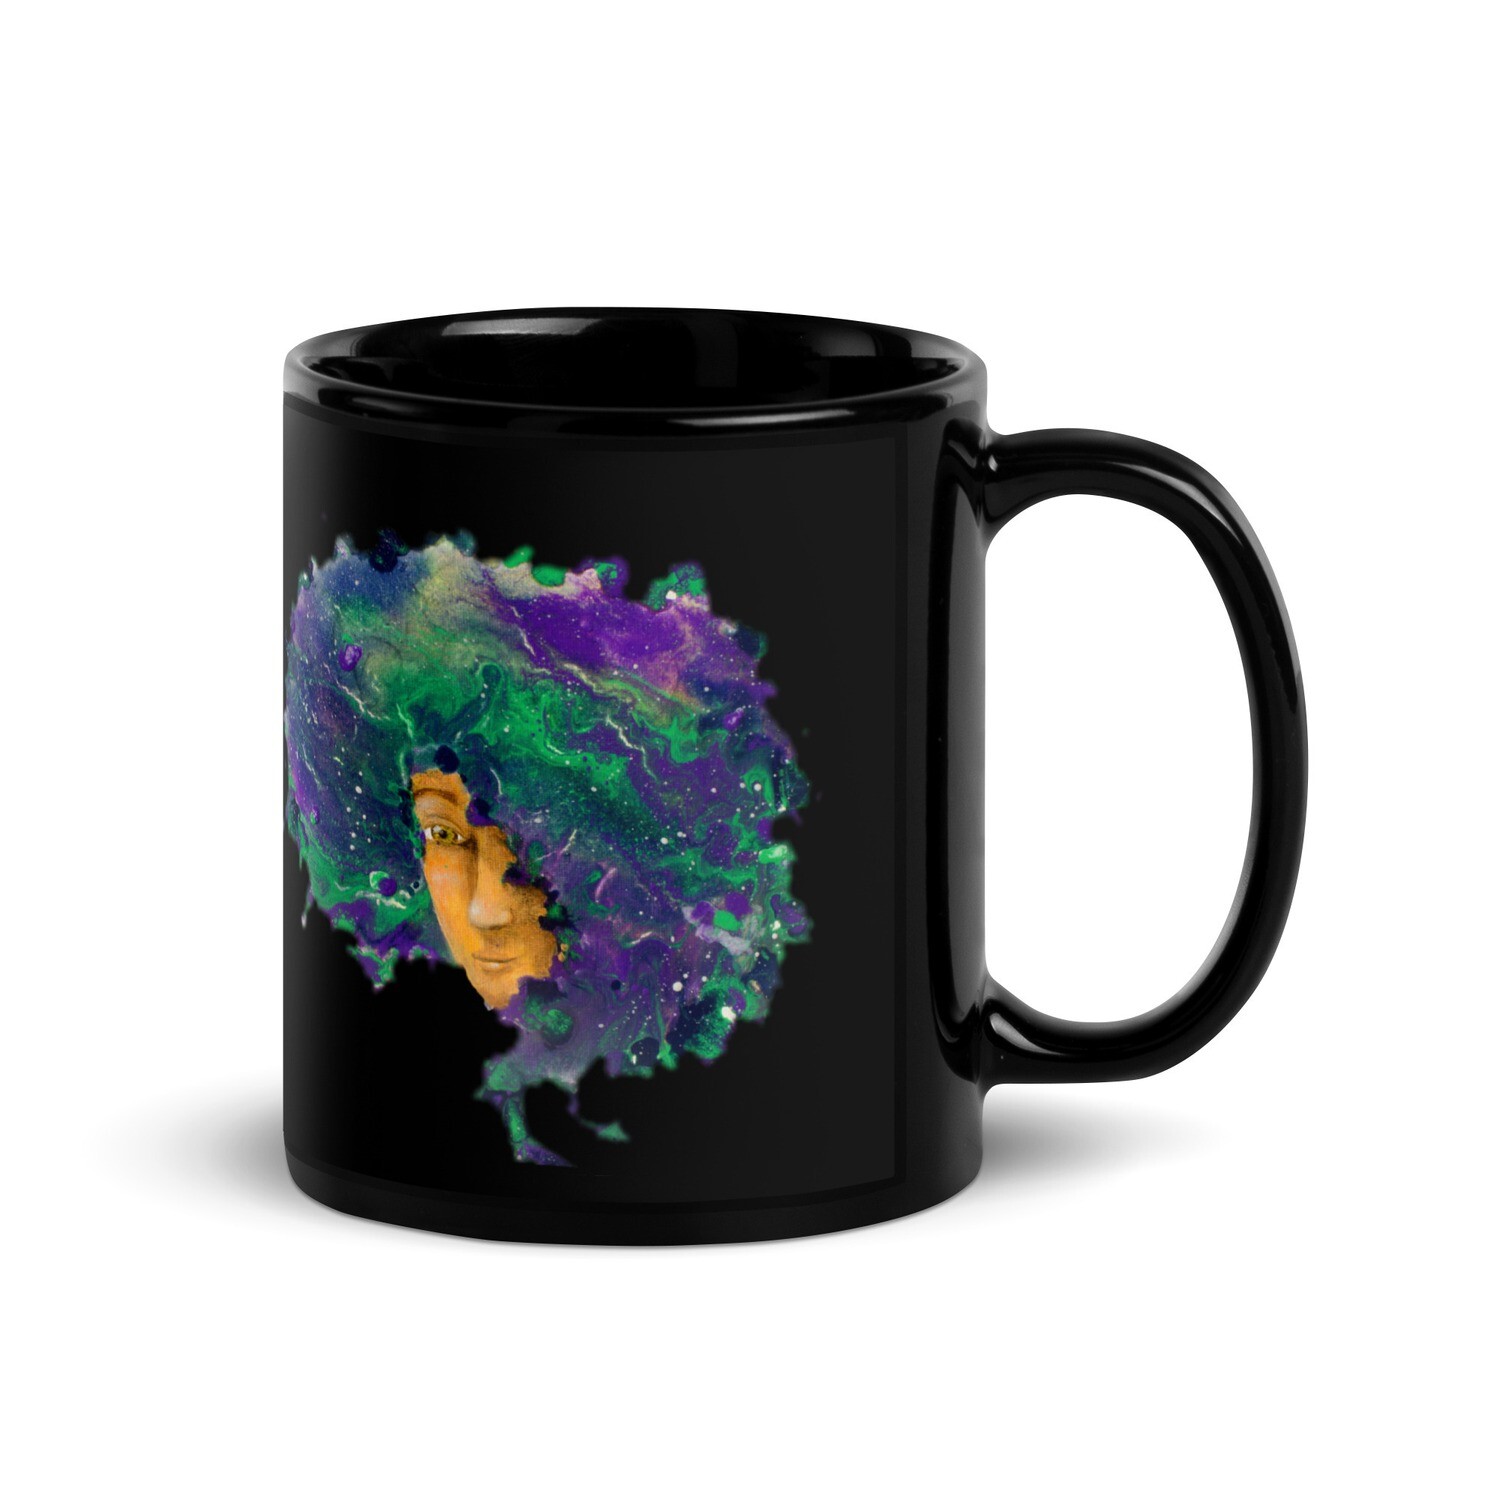 Galaxy woman cup